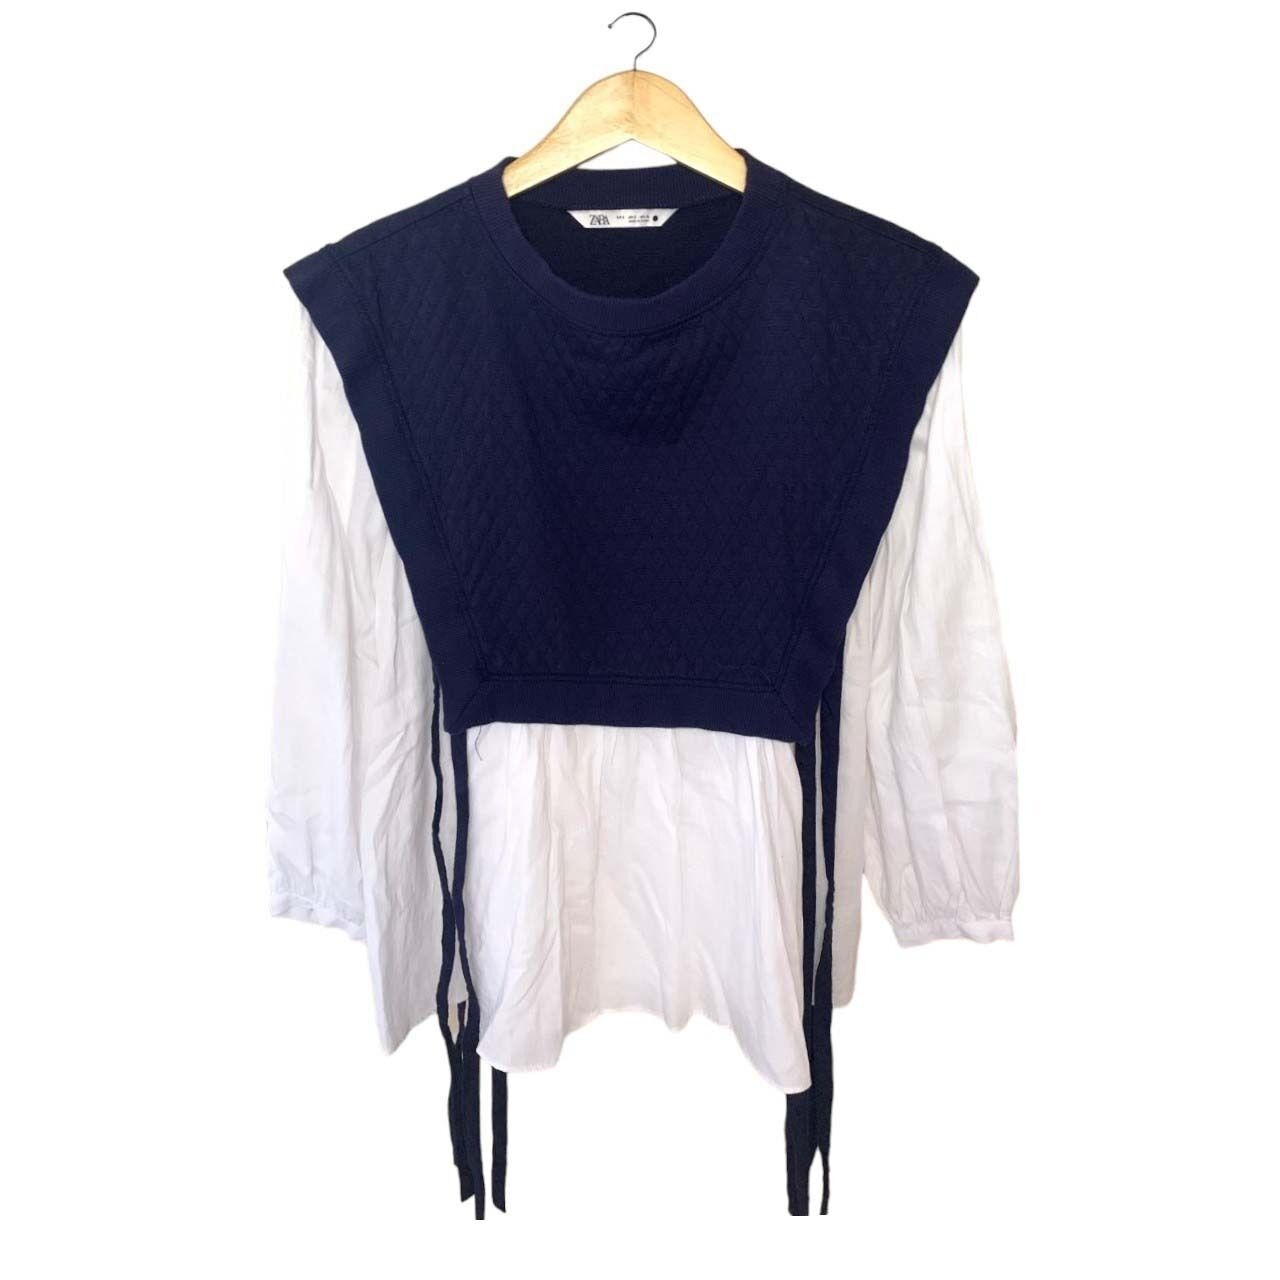 Zara Navy & White Blouse with Vest